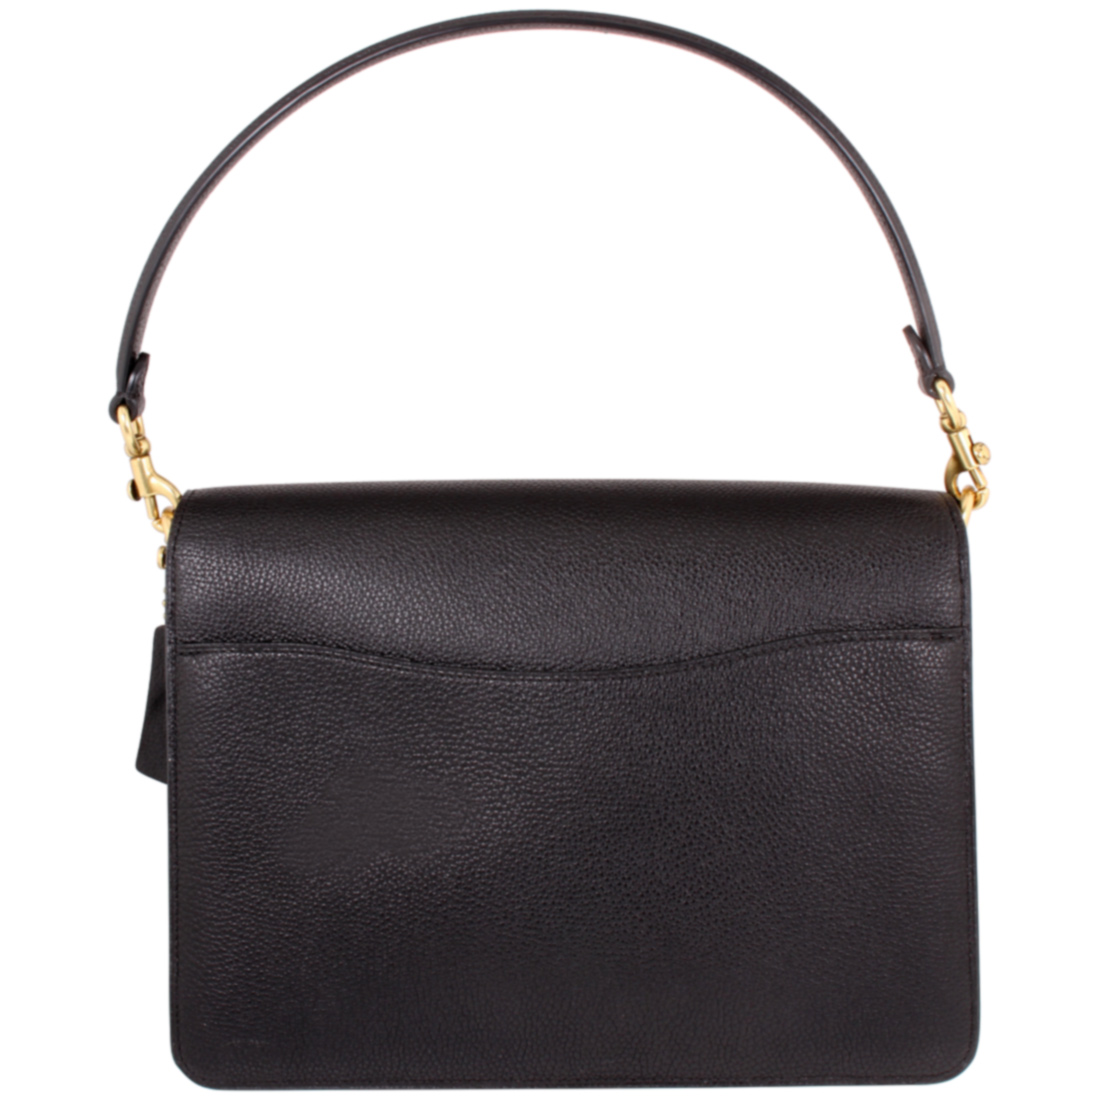 Coach Tabby Ladies Small Black Leather Shoulder Bag 73723B4BK | eBay